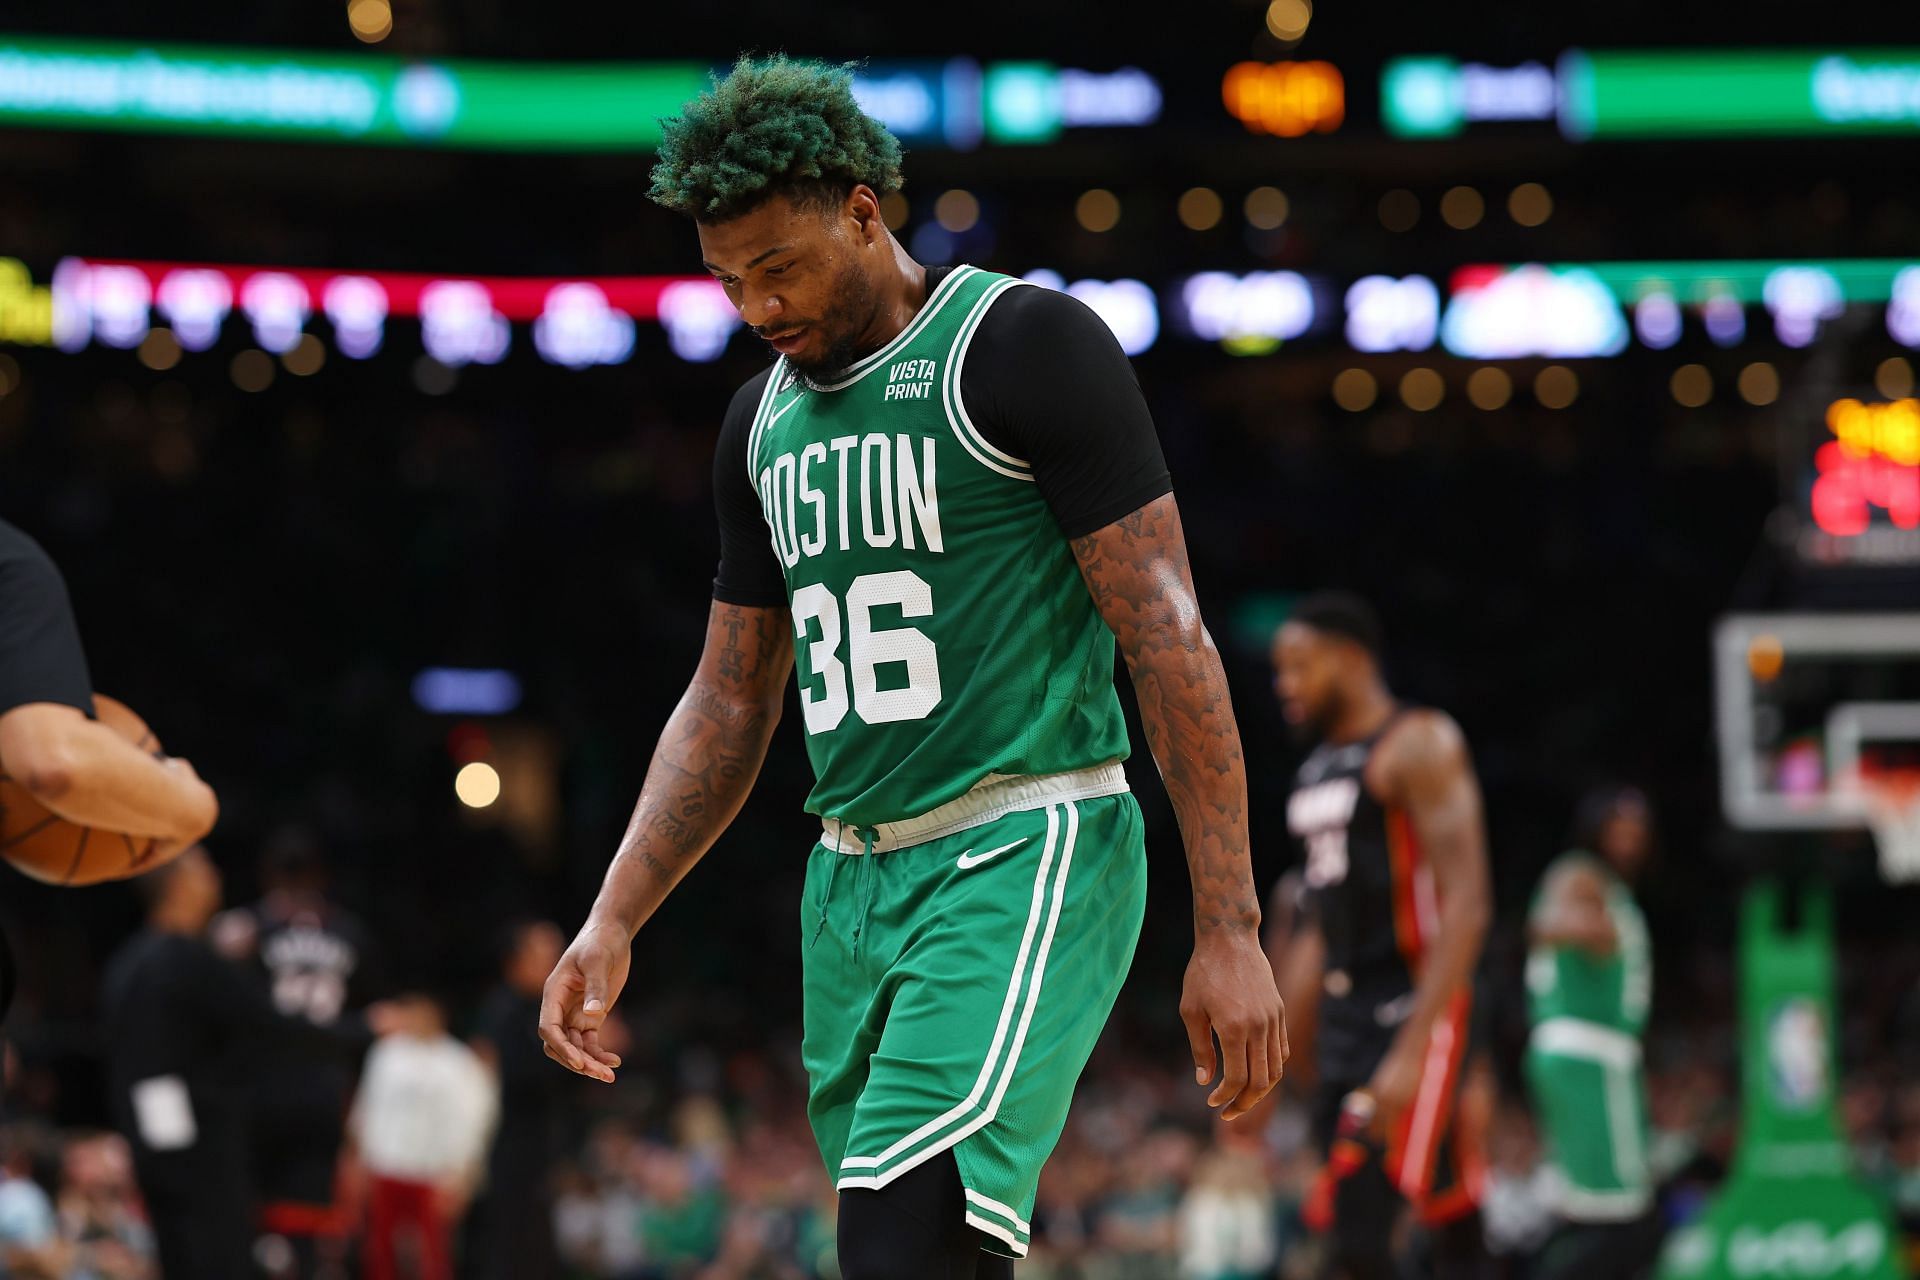 Should the Boston Celtics raise Marcus Smart's No. 36 to the